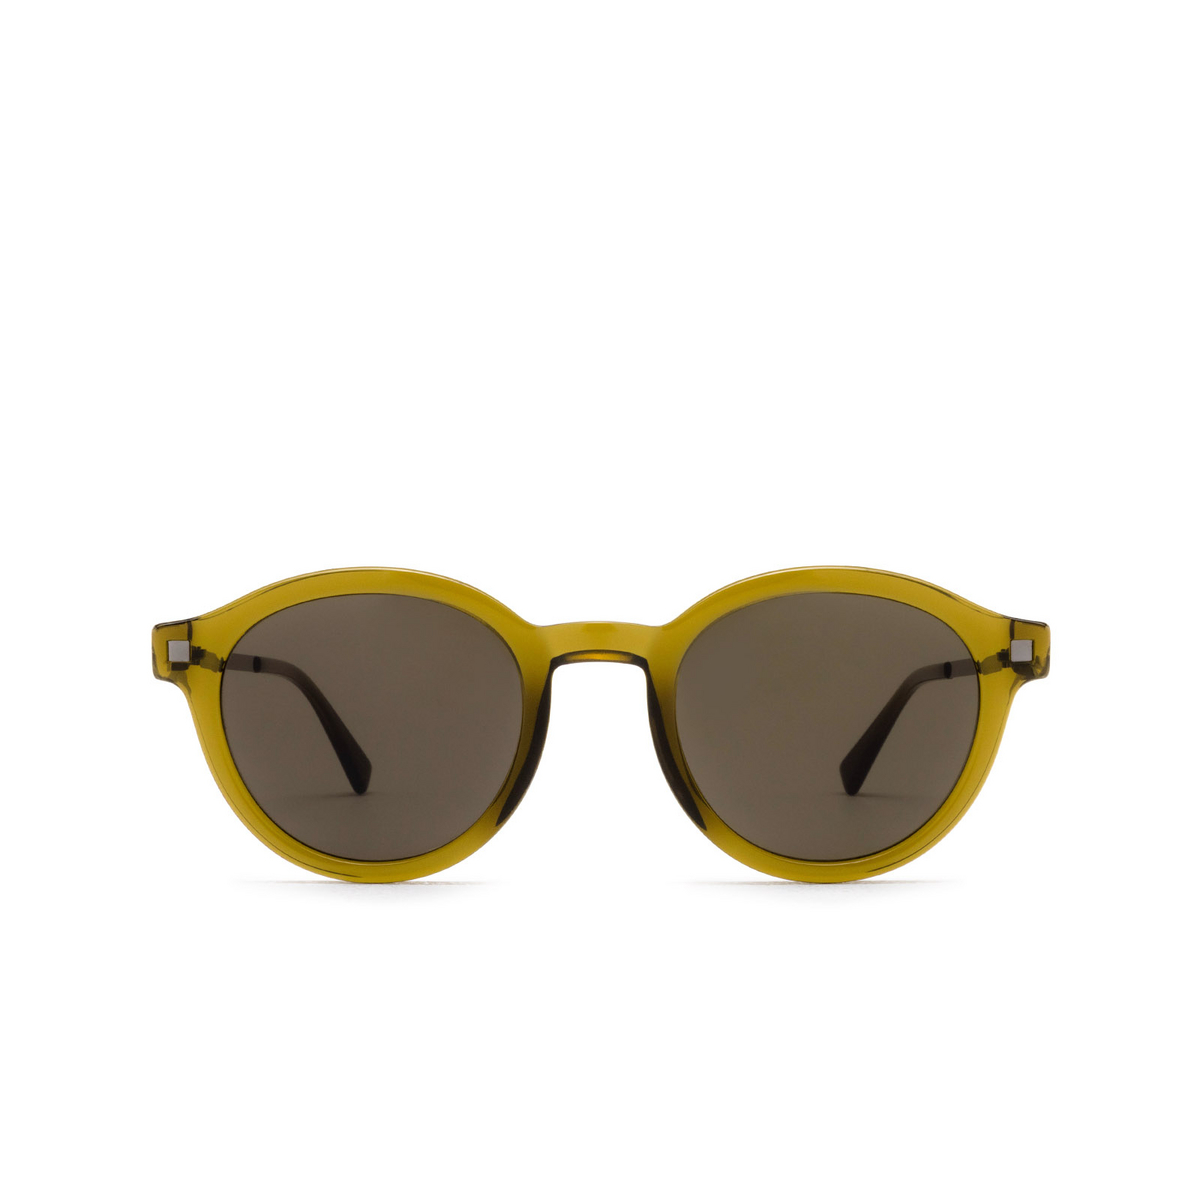 Mykita® Round Sunglasses: Ketill color 723 C114 Peridot/shiny Graphite - front view